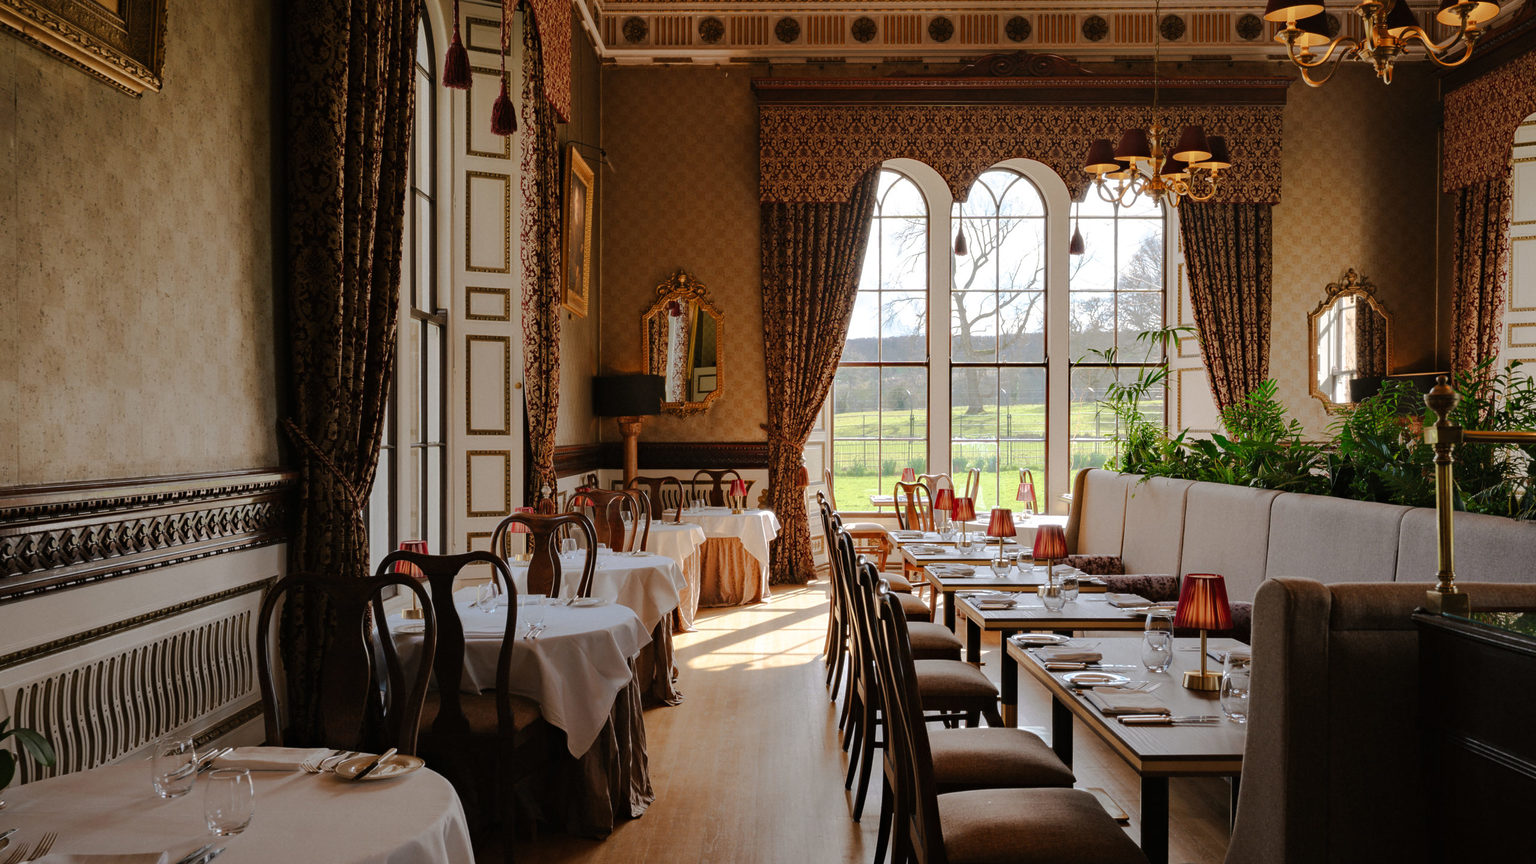 The dining room at Samuel's restaurant at Swinton Park Hotel in Masham, North Yorkshire